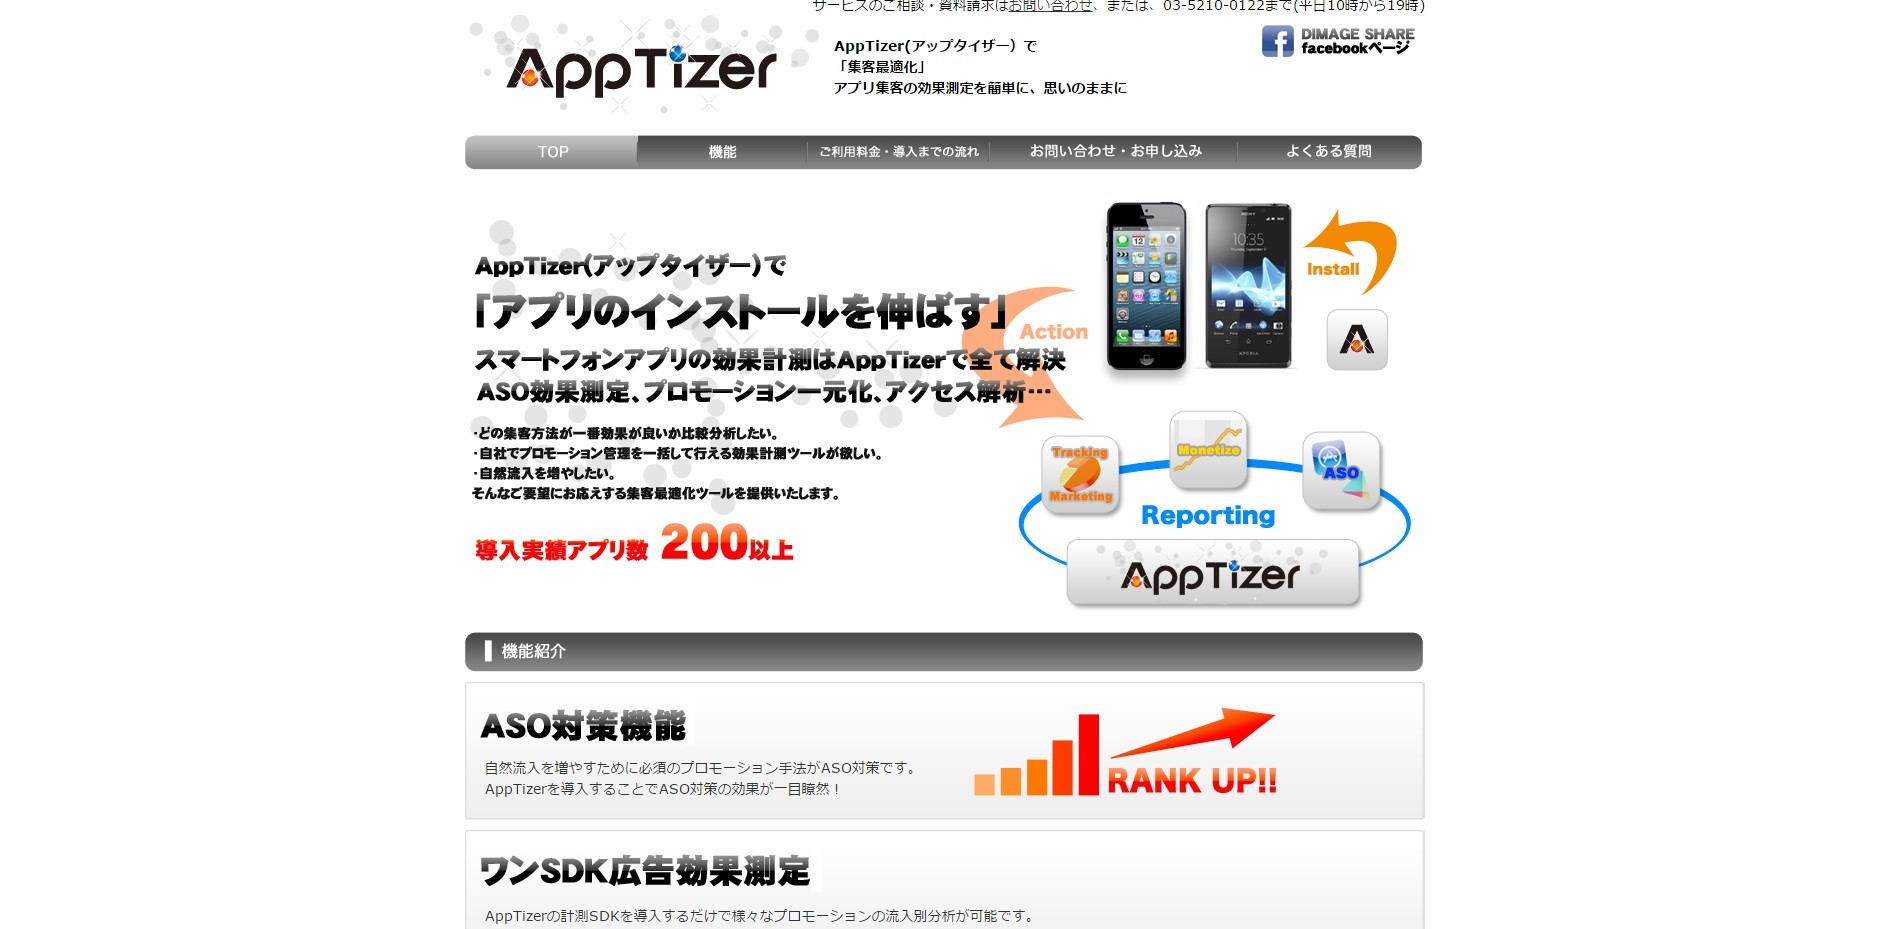 「AppTizer」の公式サイト